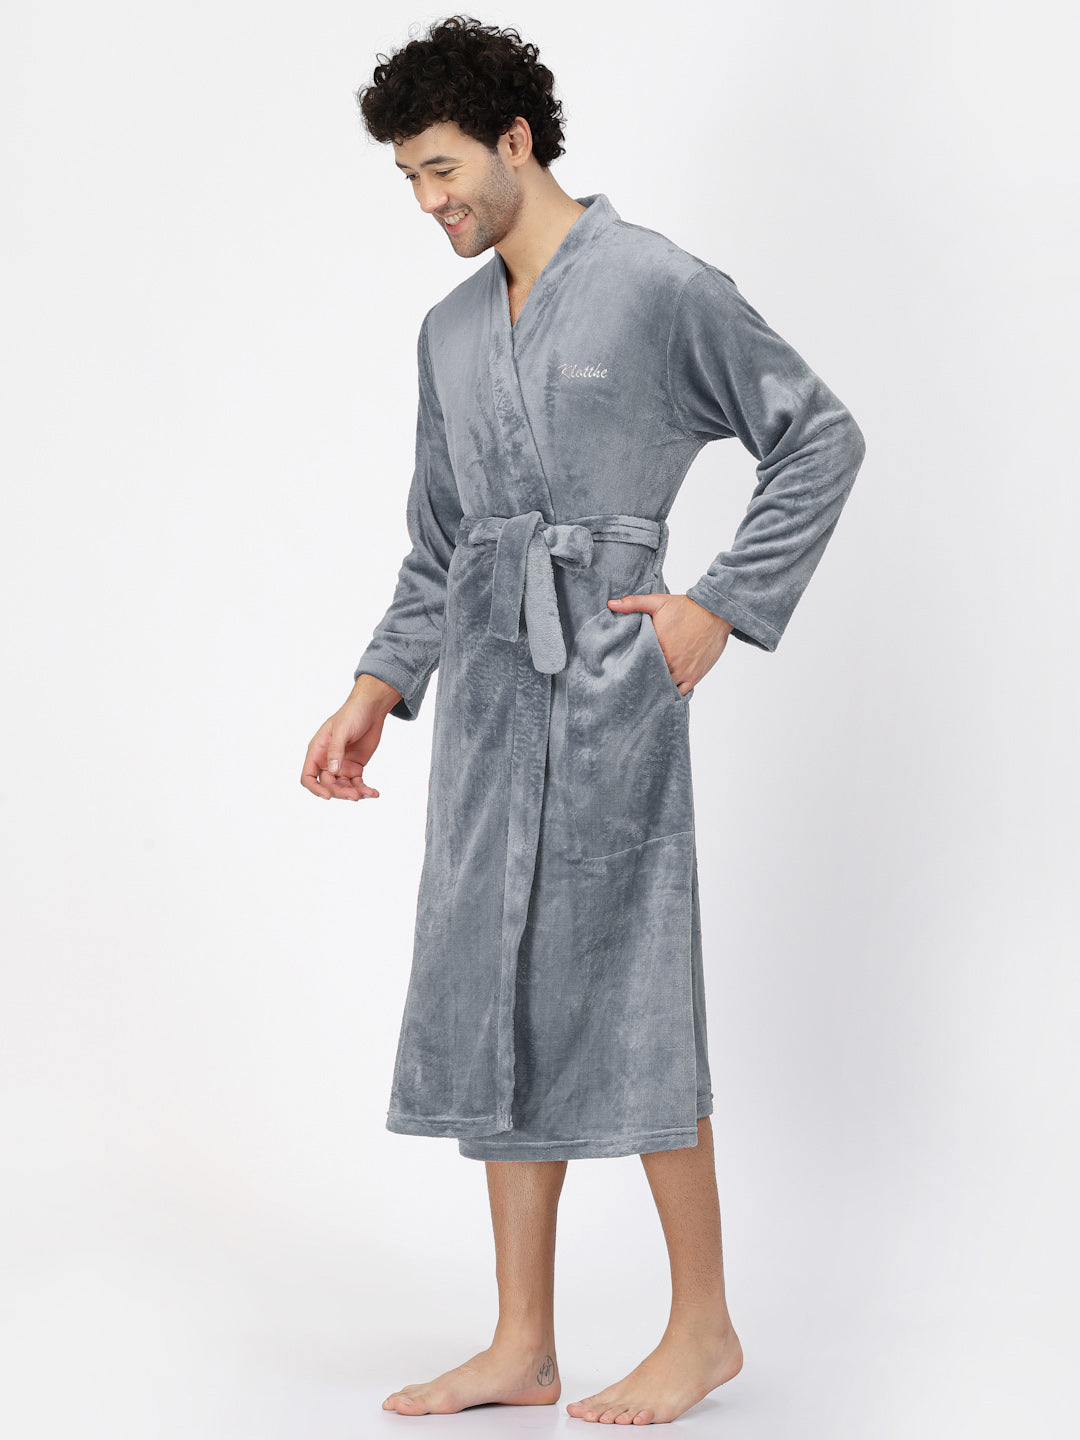 Klotthe Men Grey Solid Bath Robe With Belt